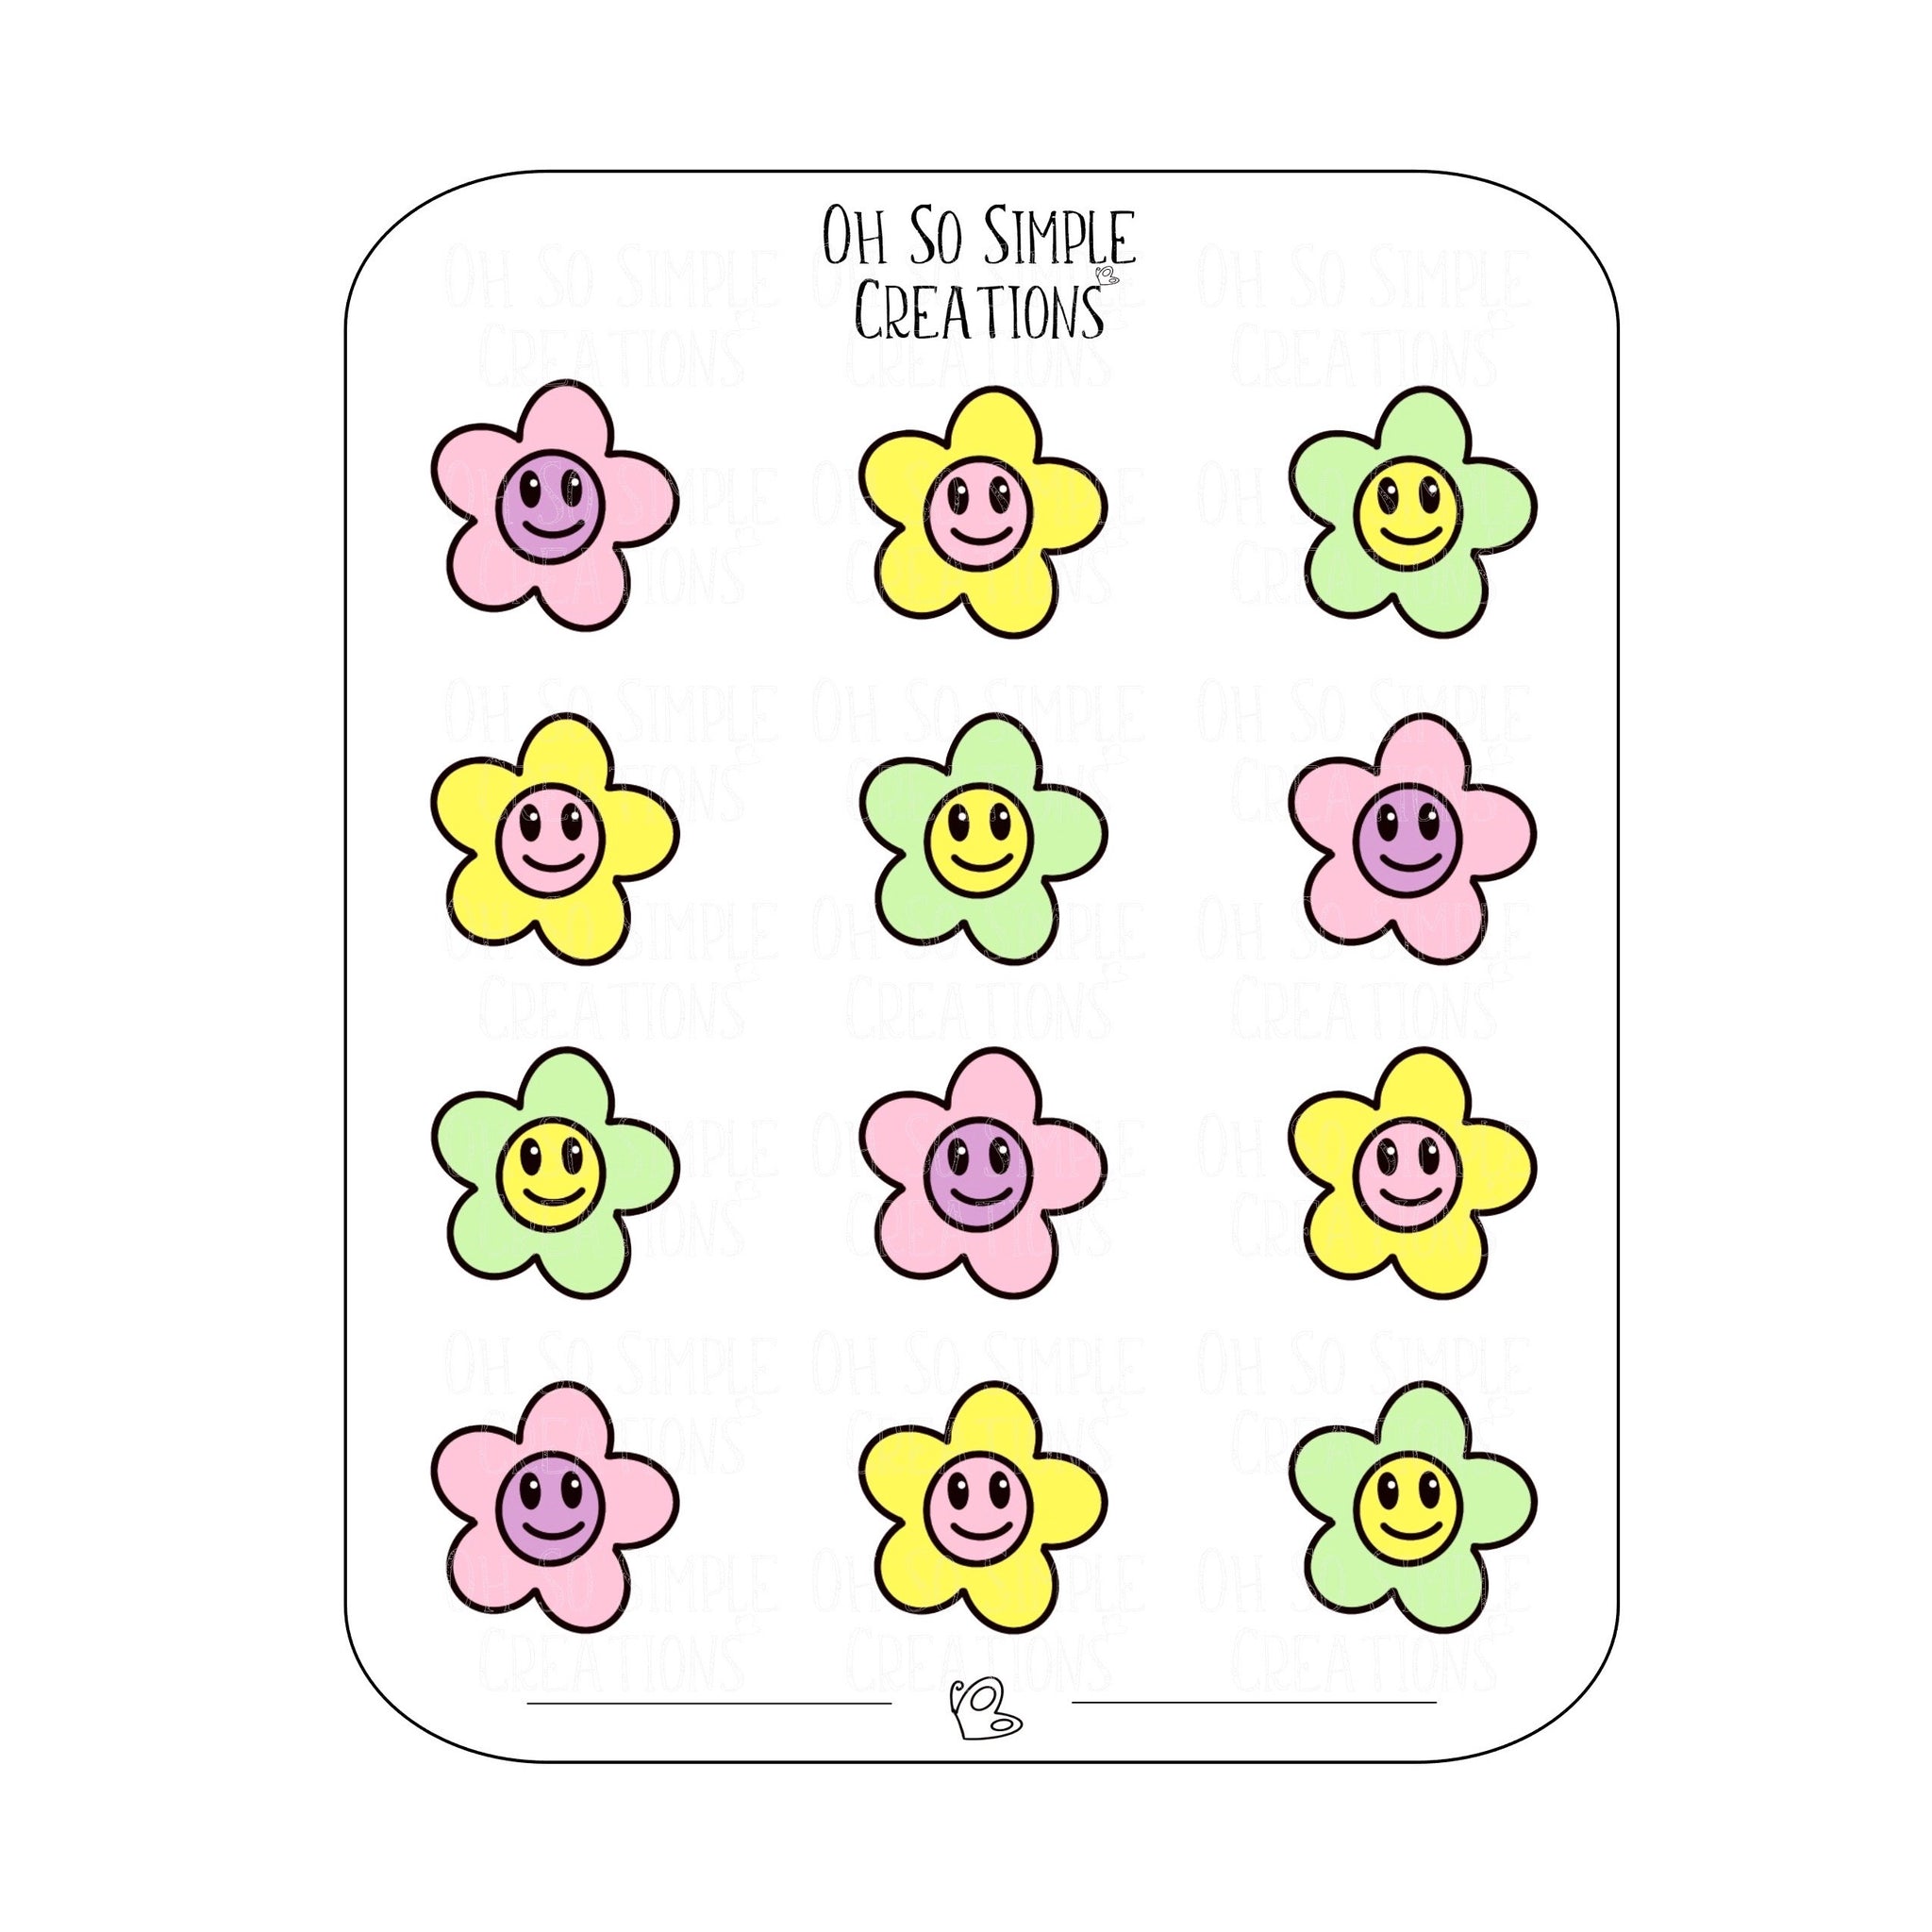 Spring Flower Sticker Sheet